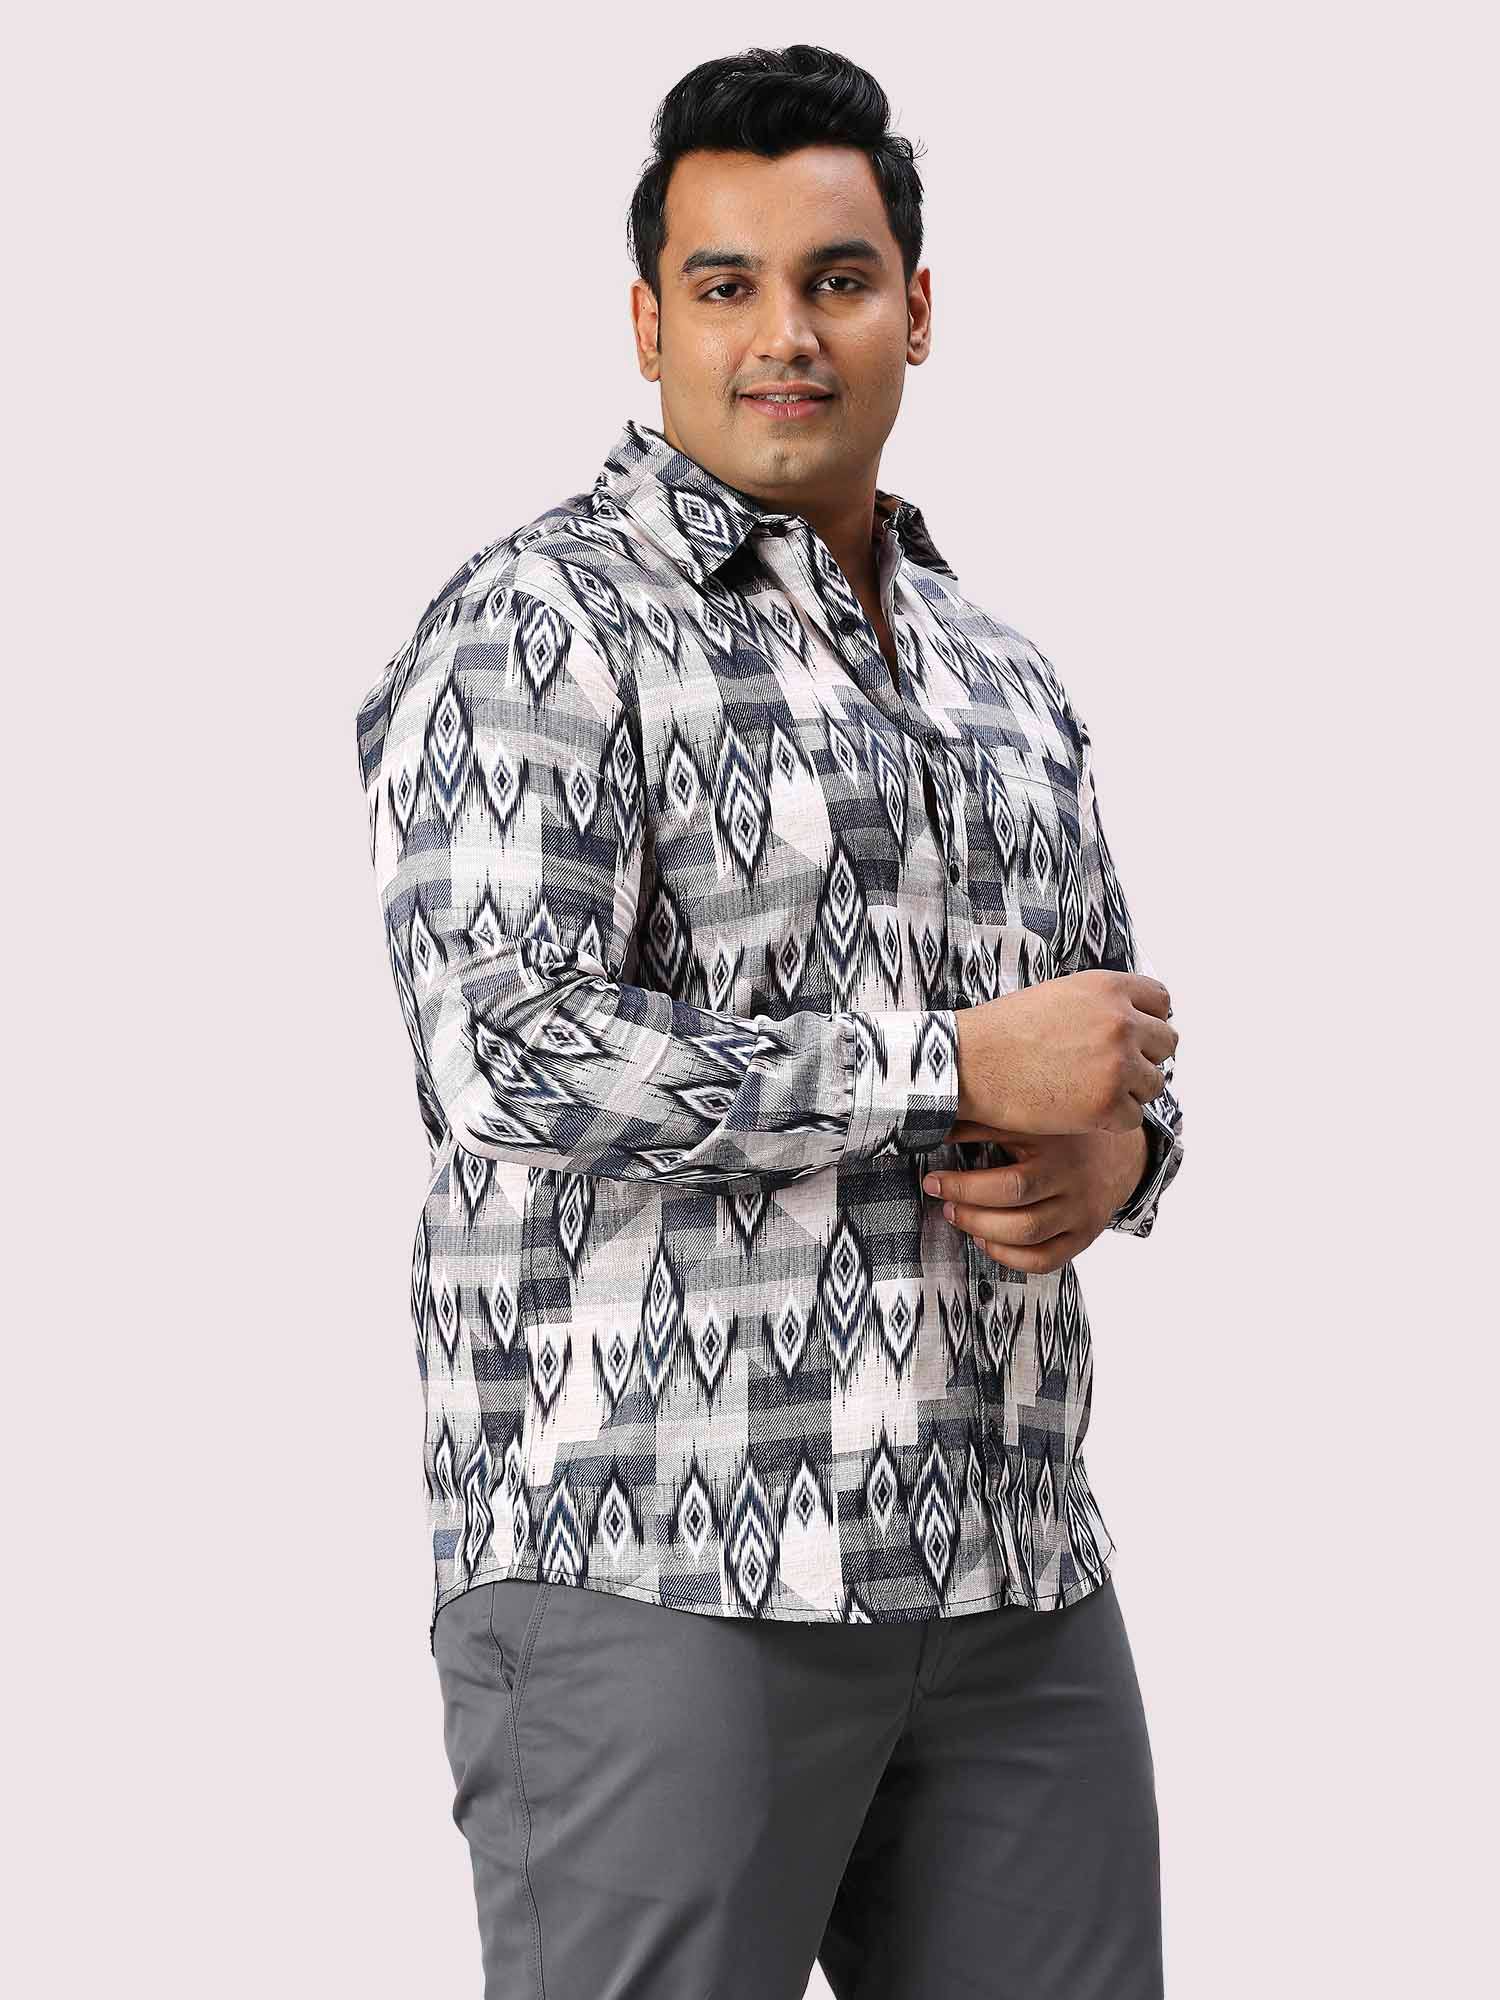 Comet Digital Printed Shirt Full Sleeve Men's Plus Size - Guniaa Fashions